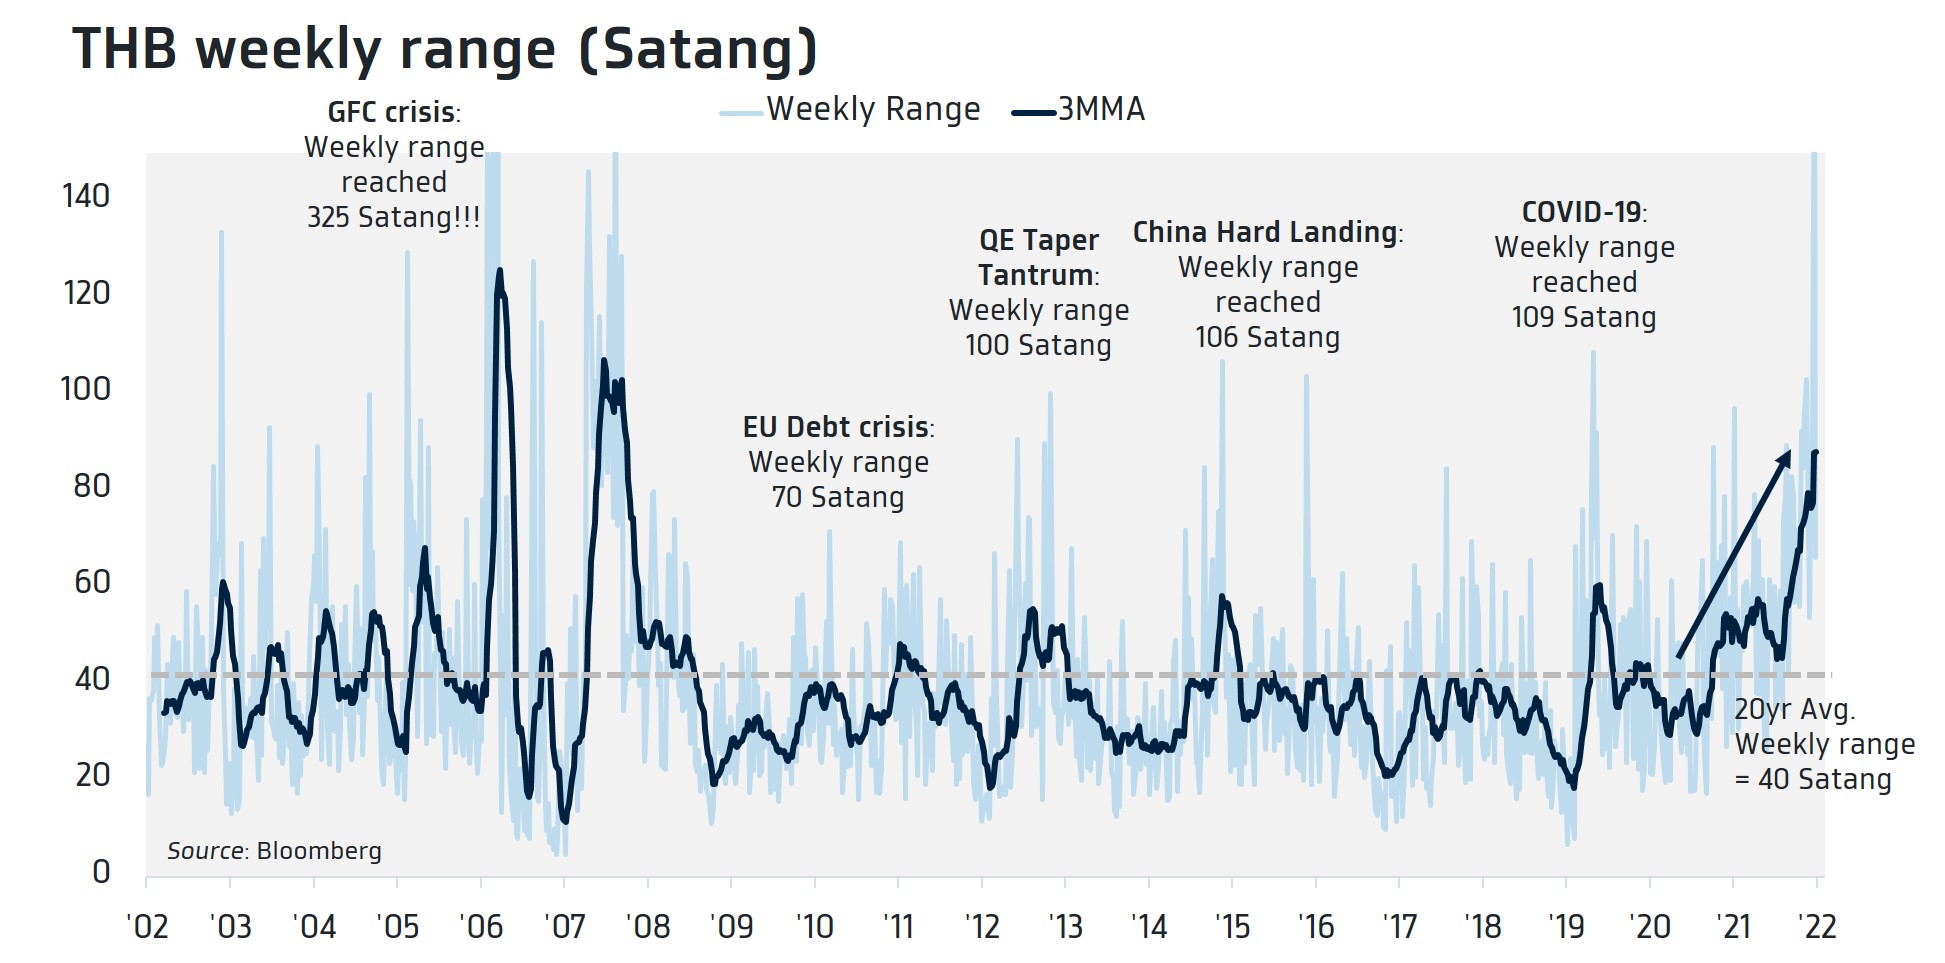 USD/THB Weekly ranges